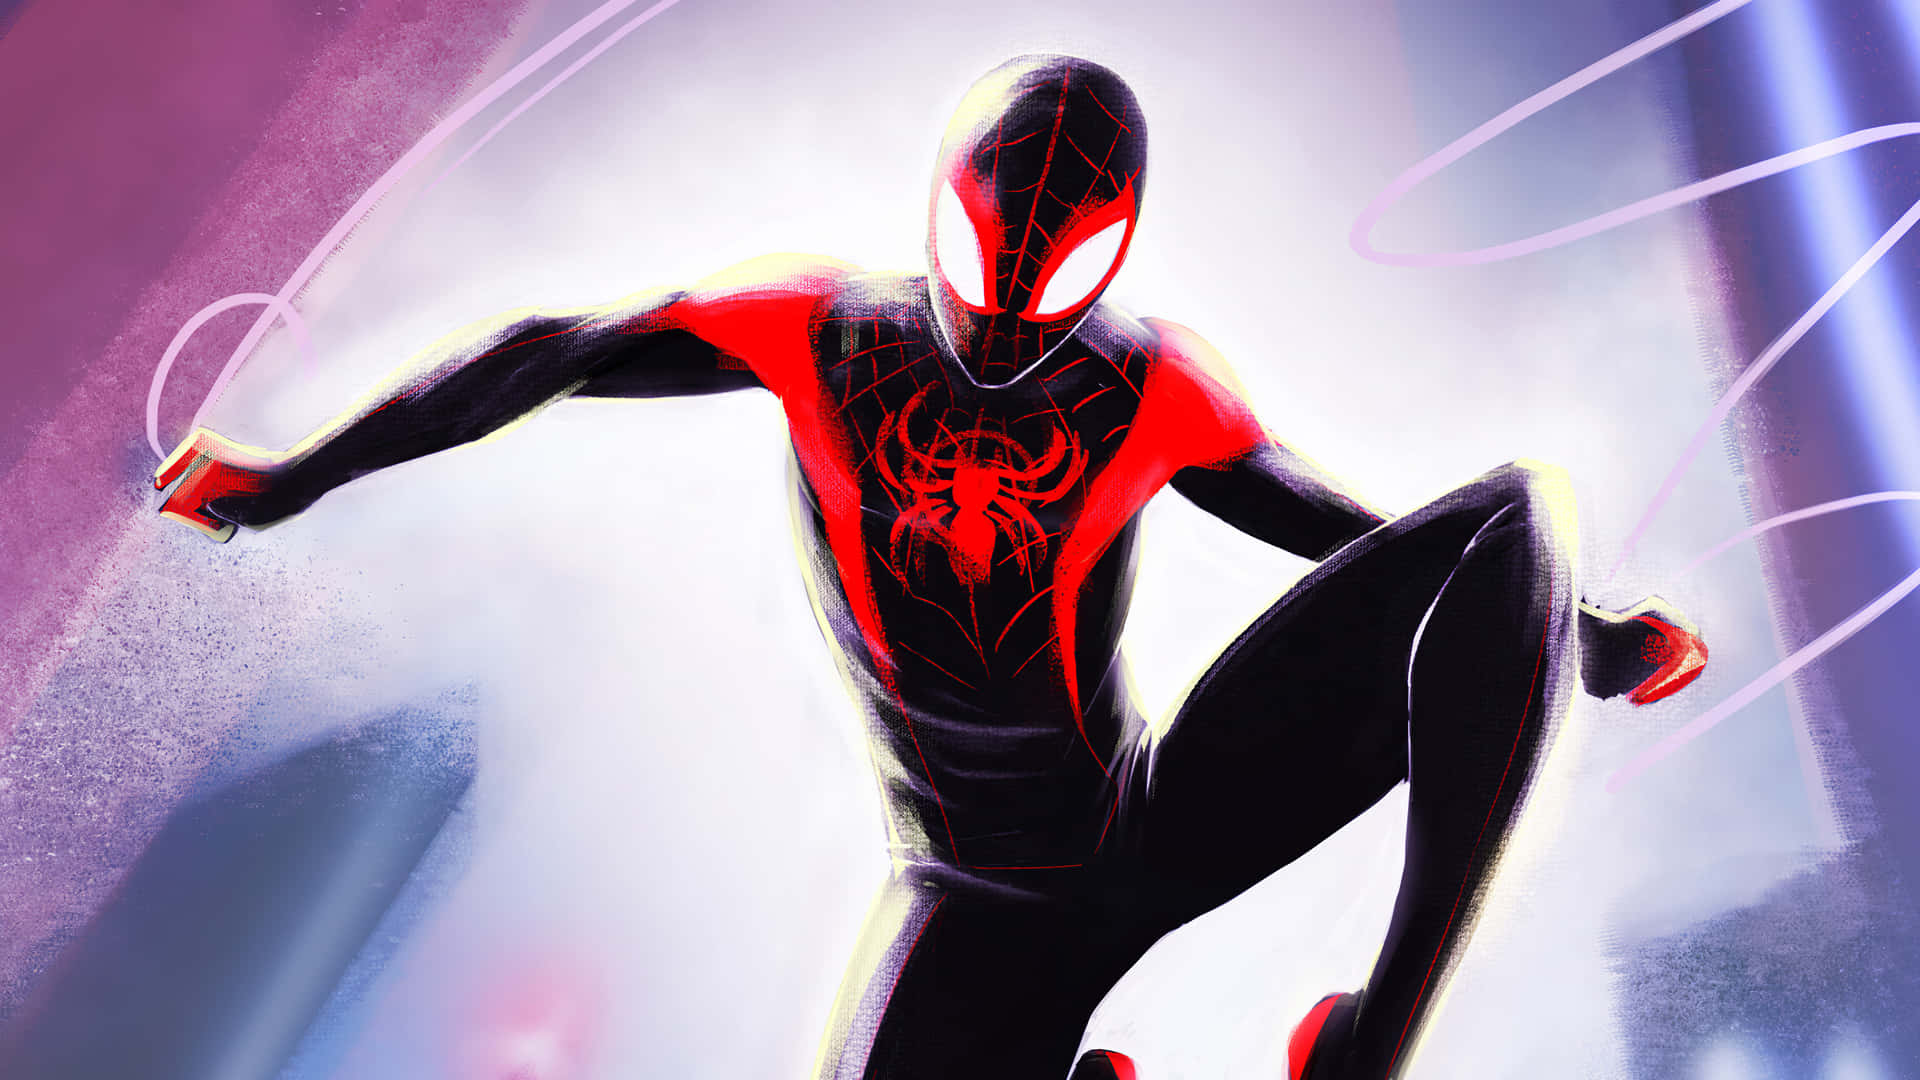 Ultimate Spider-man Swinging Action Background